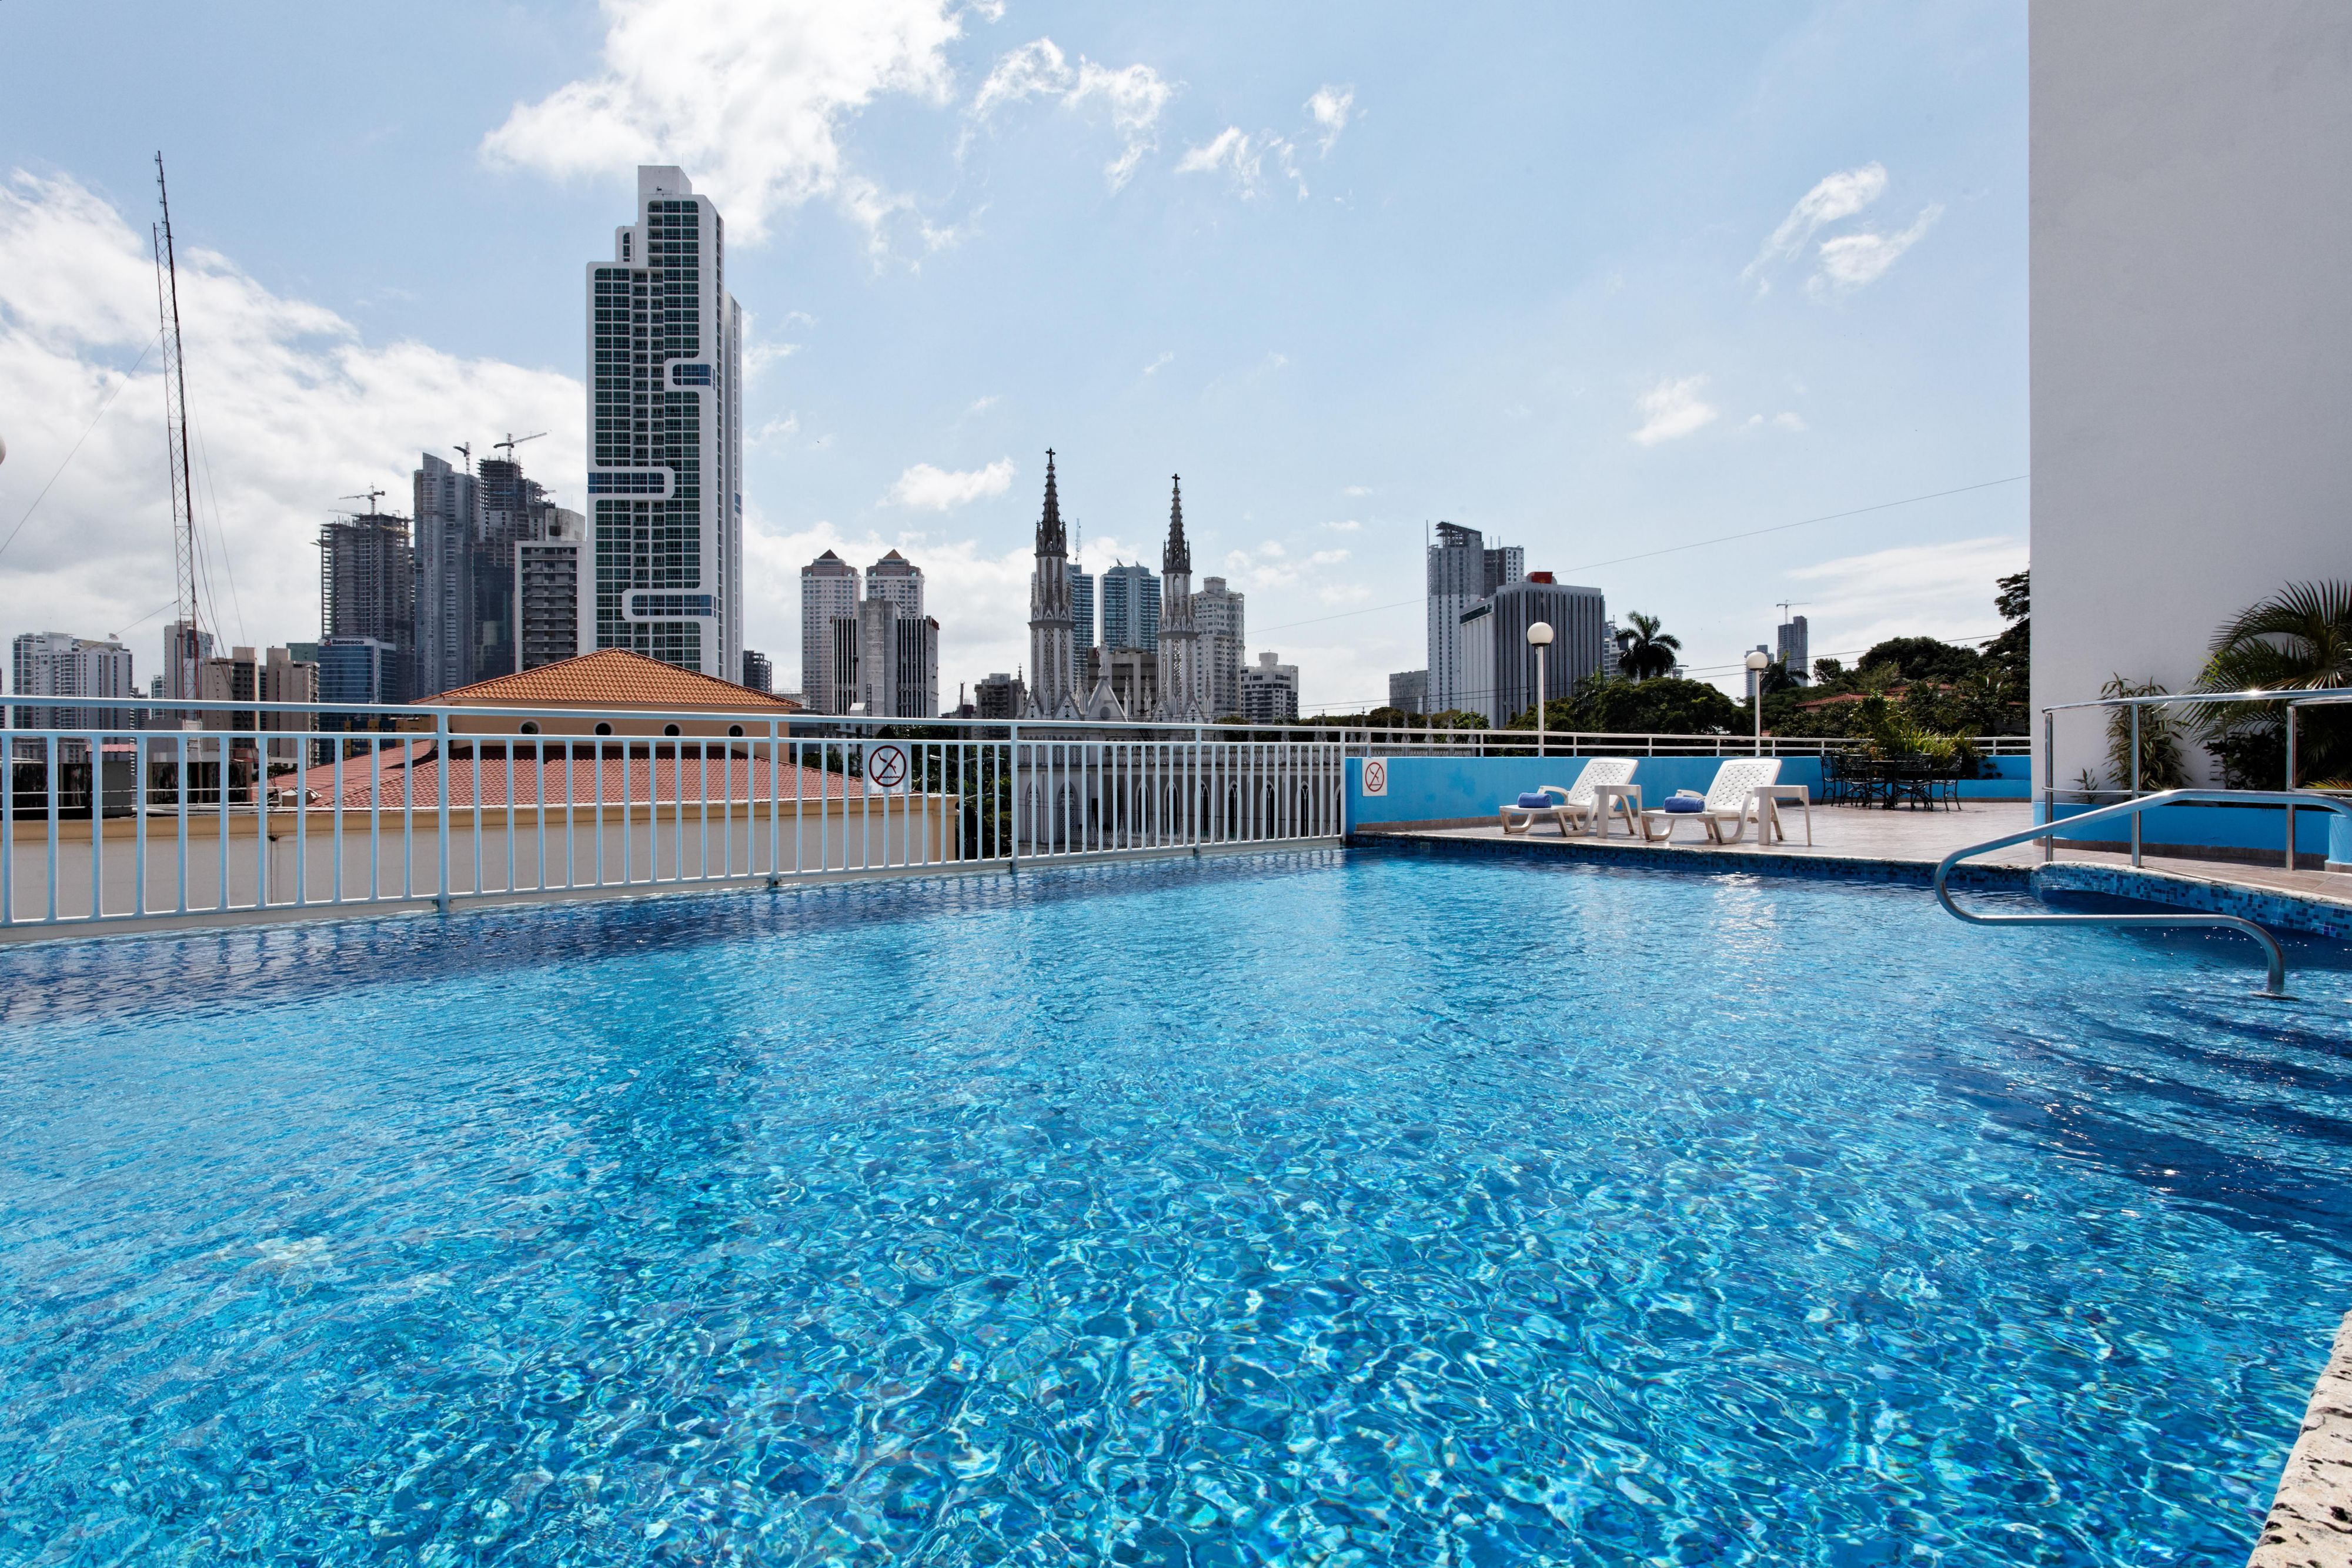 Swimming Pool at the Crowne Plaza Panama Hotel